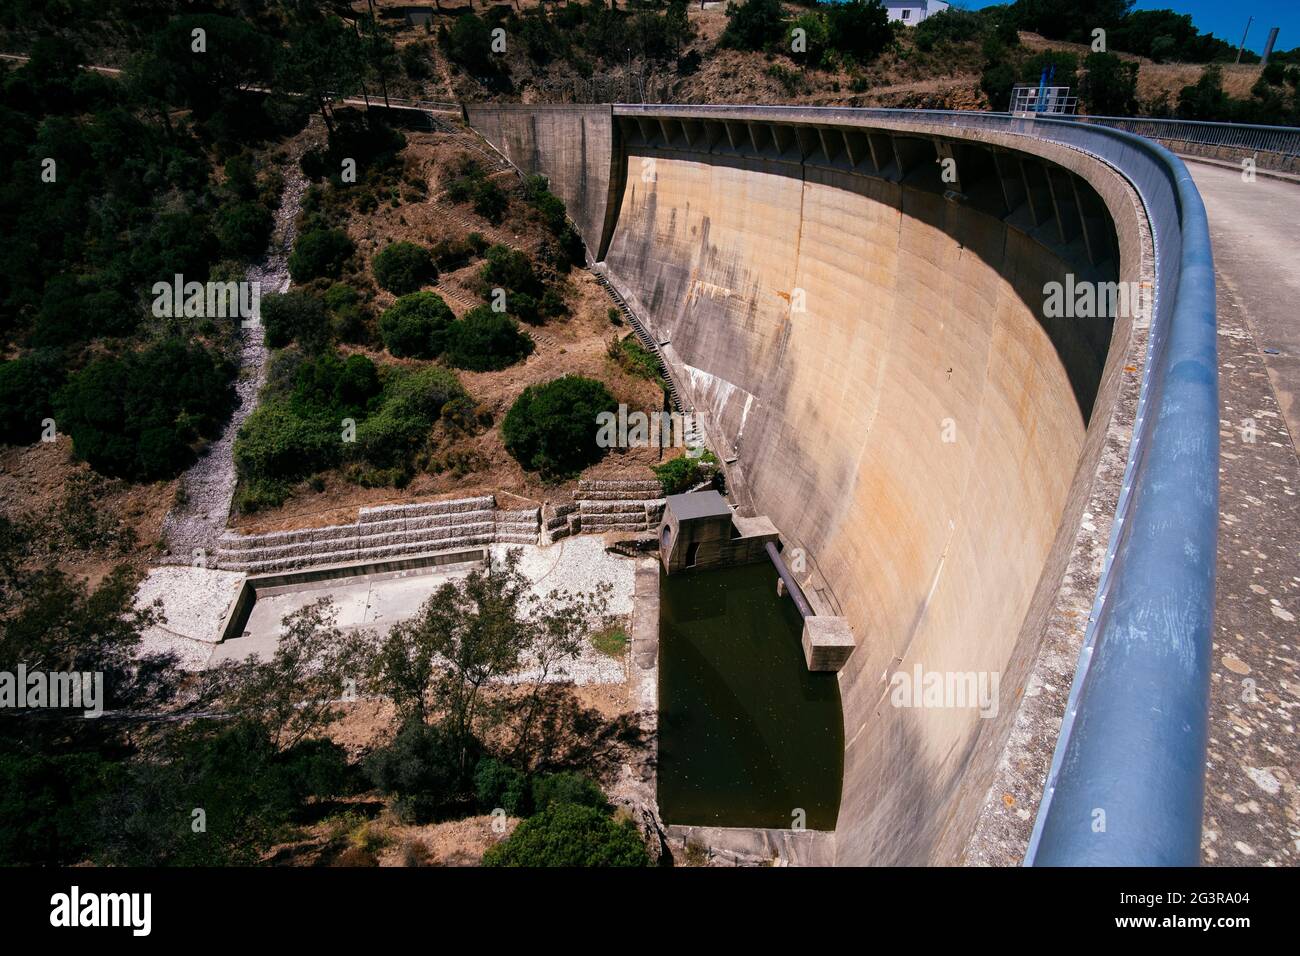 A view of the dam at Barragem da bravura in The Algarve, Portugal Stock Photo